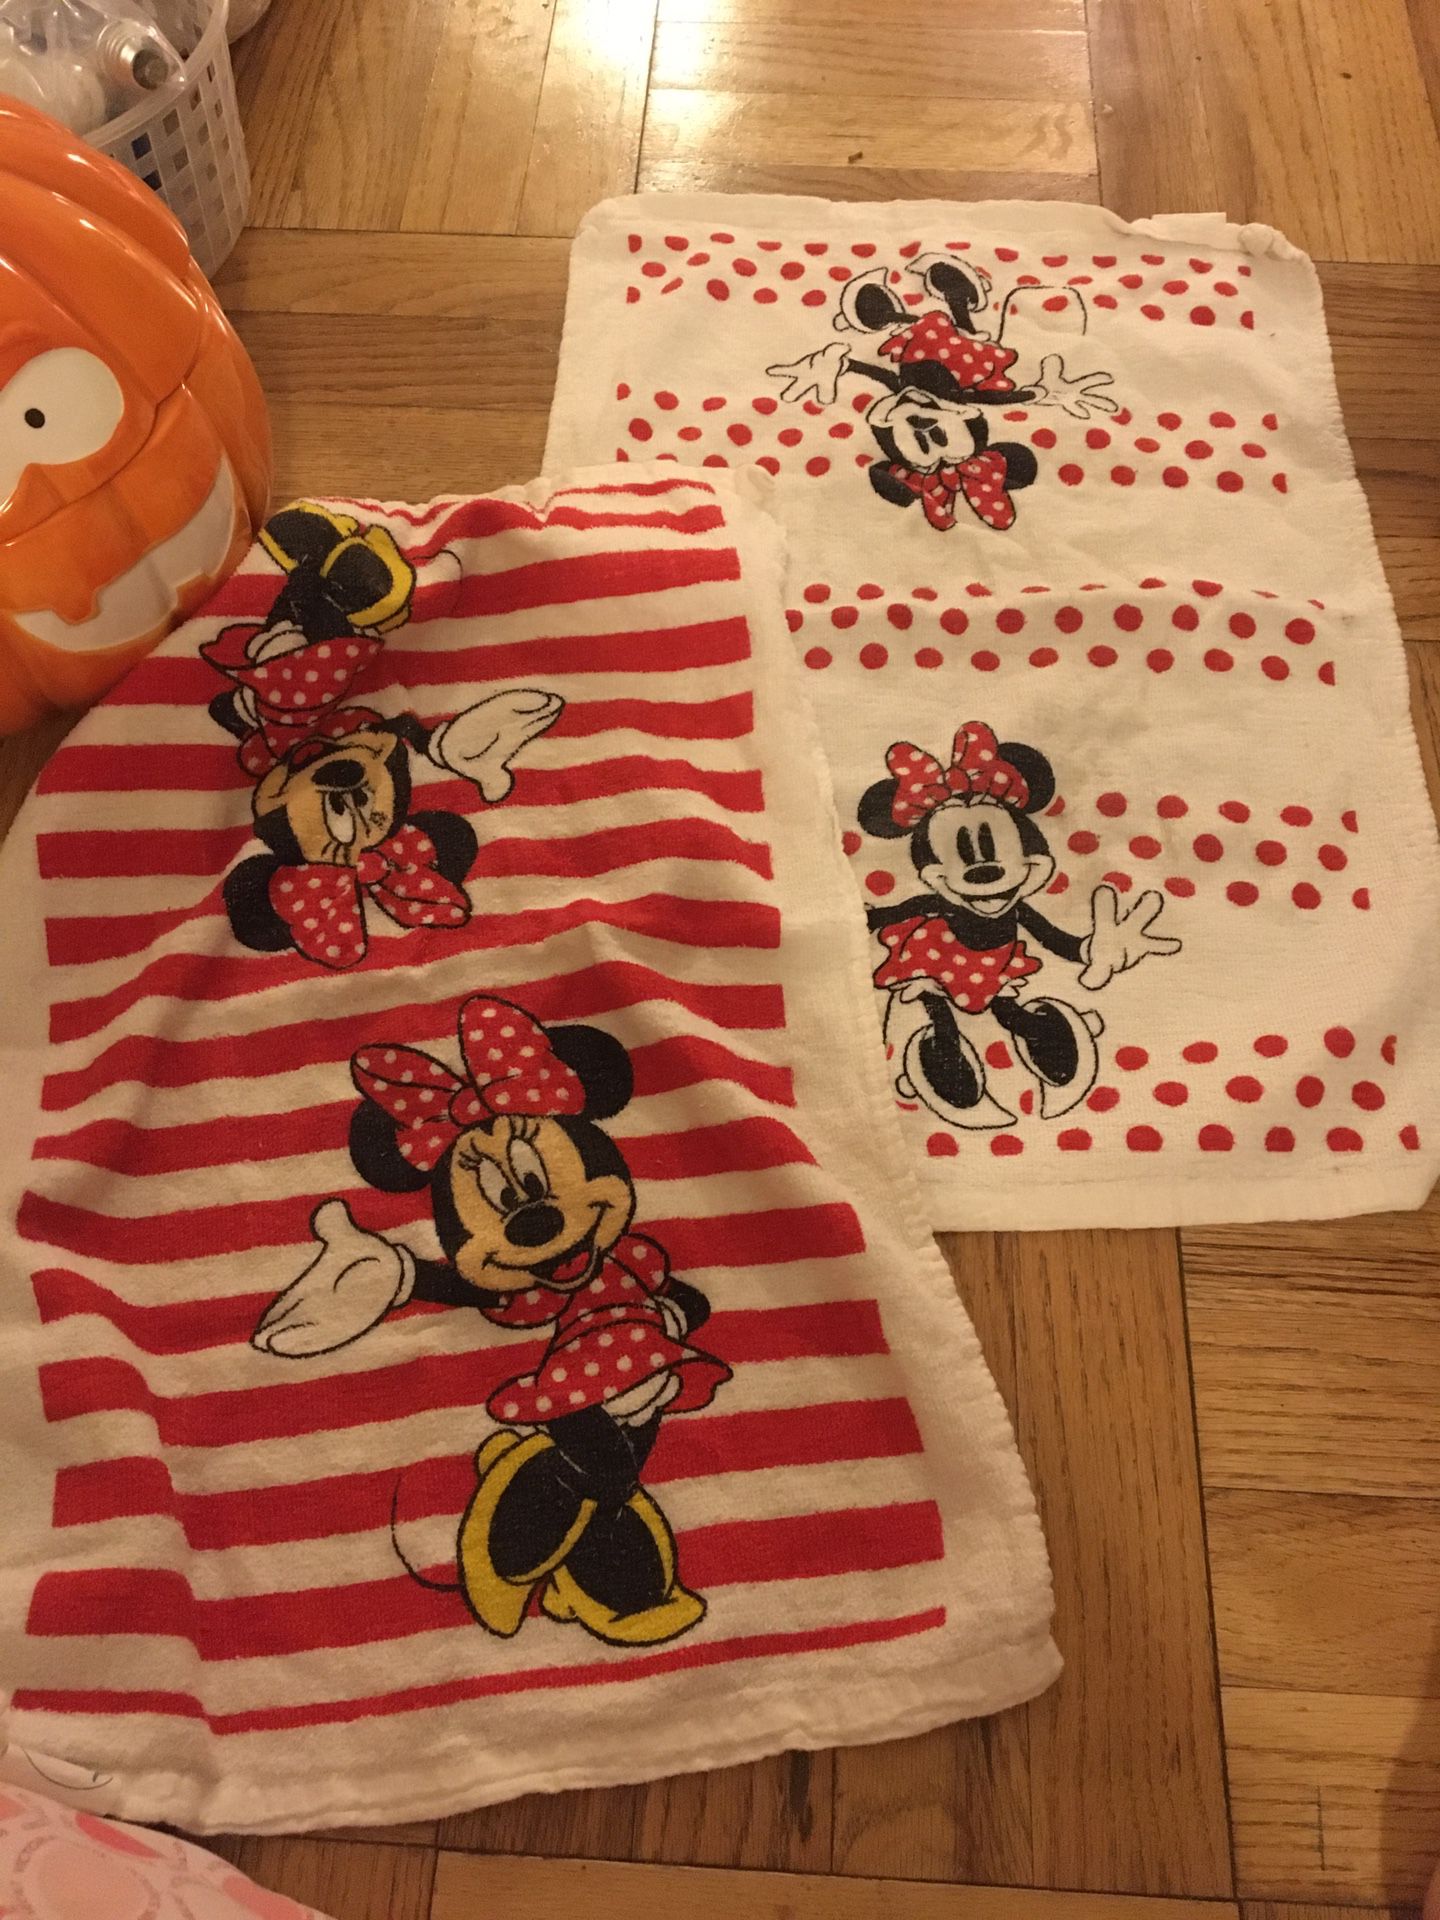 Disney Minnie Mouse kitchen towels